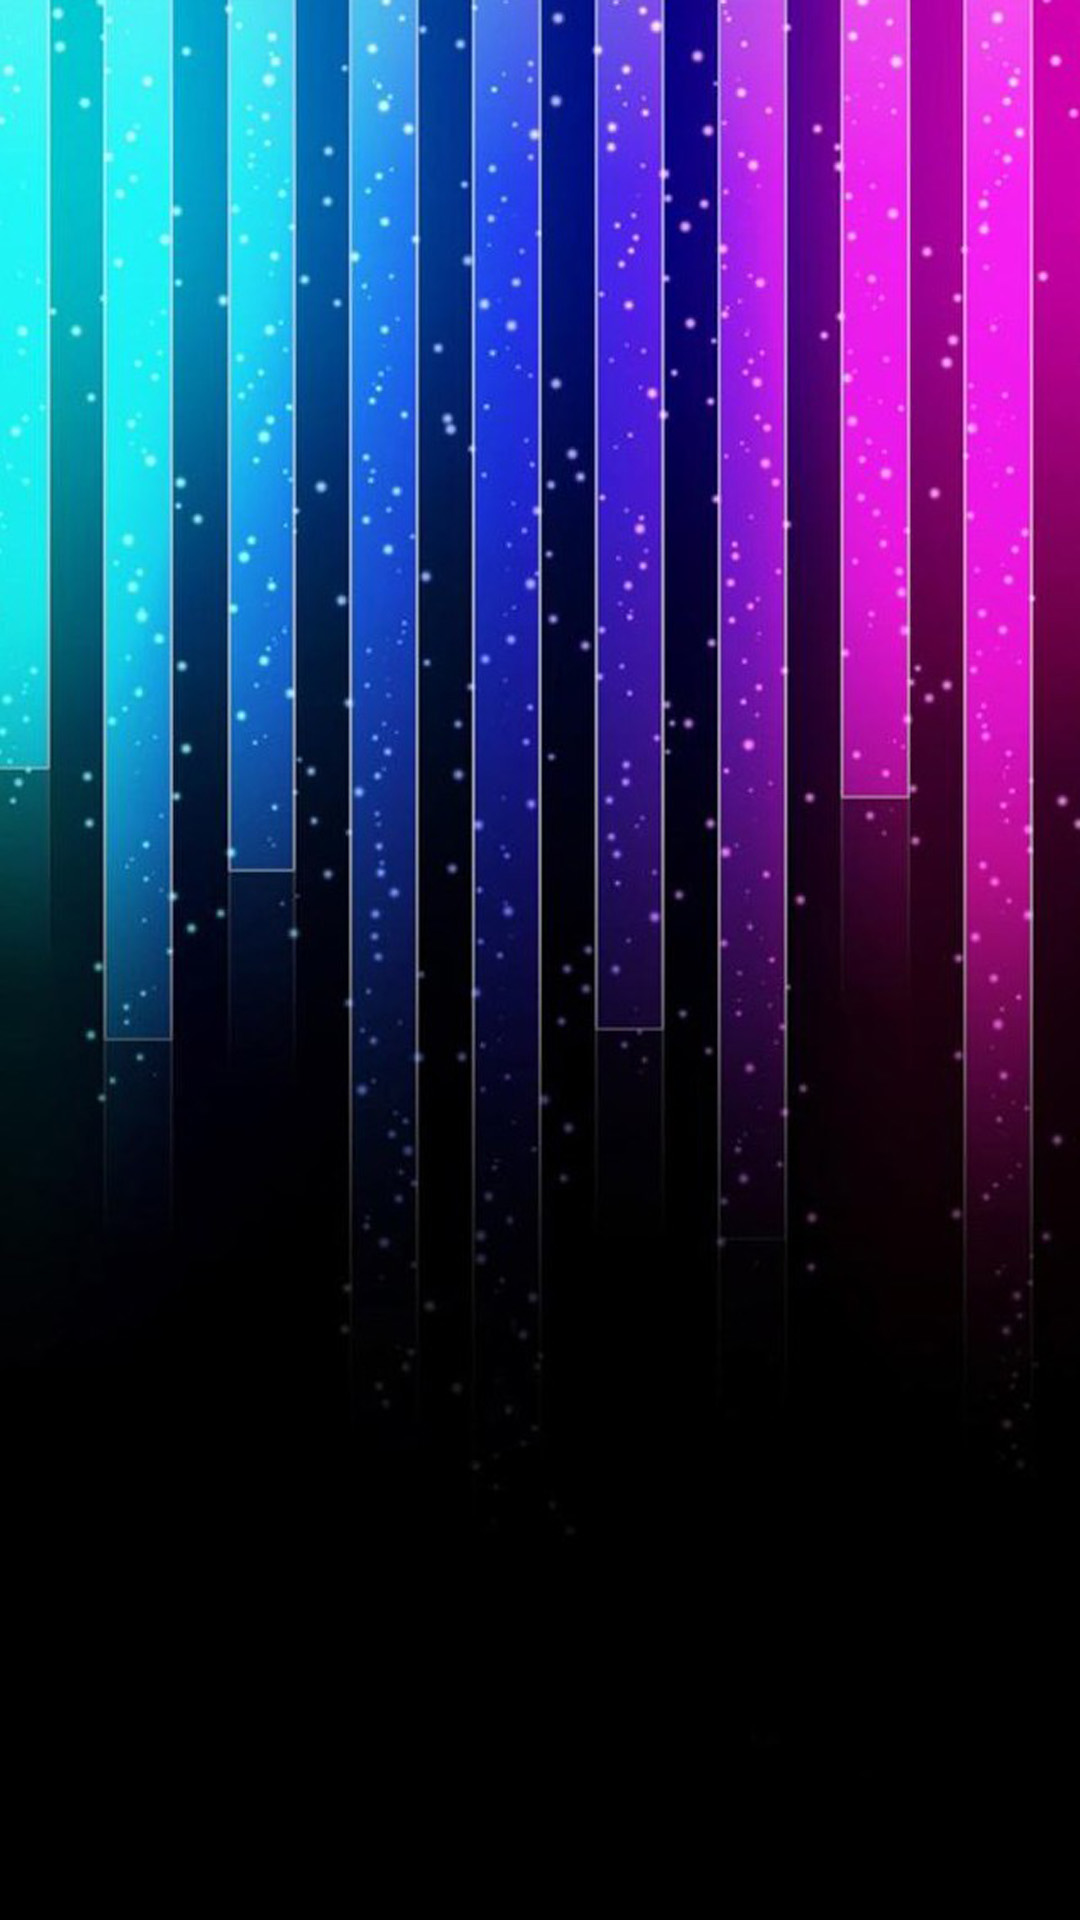 fondos de pantalla de música hd para android,azul,violeta,texto,púrpura,ligero